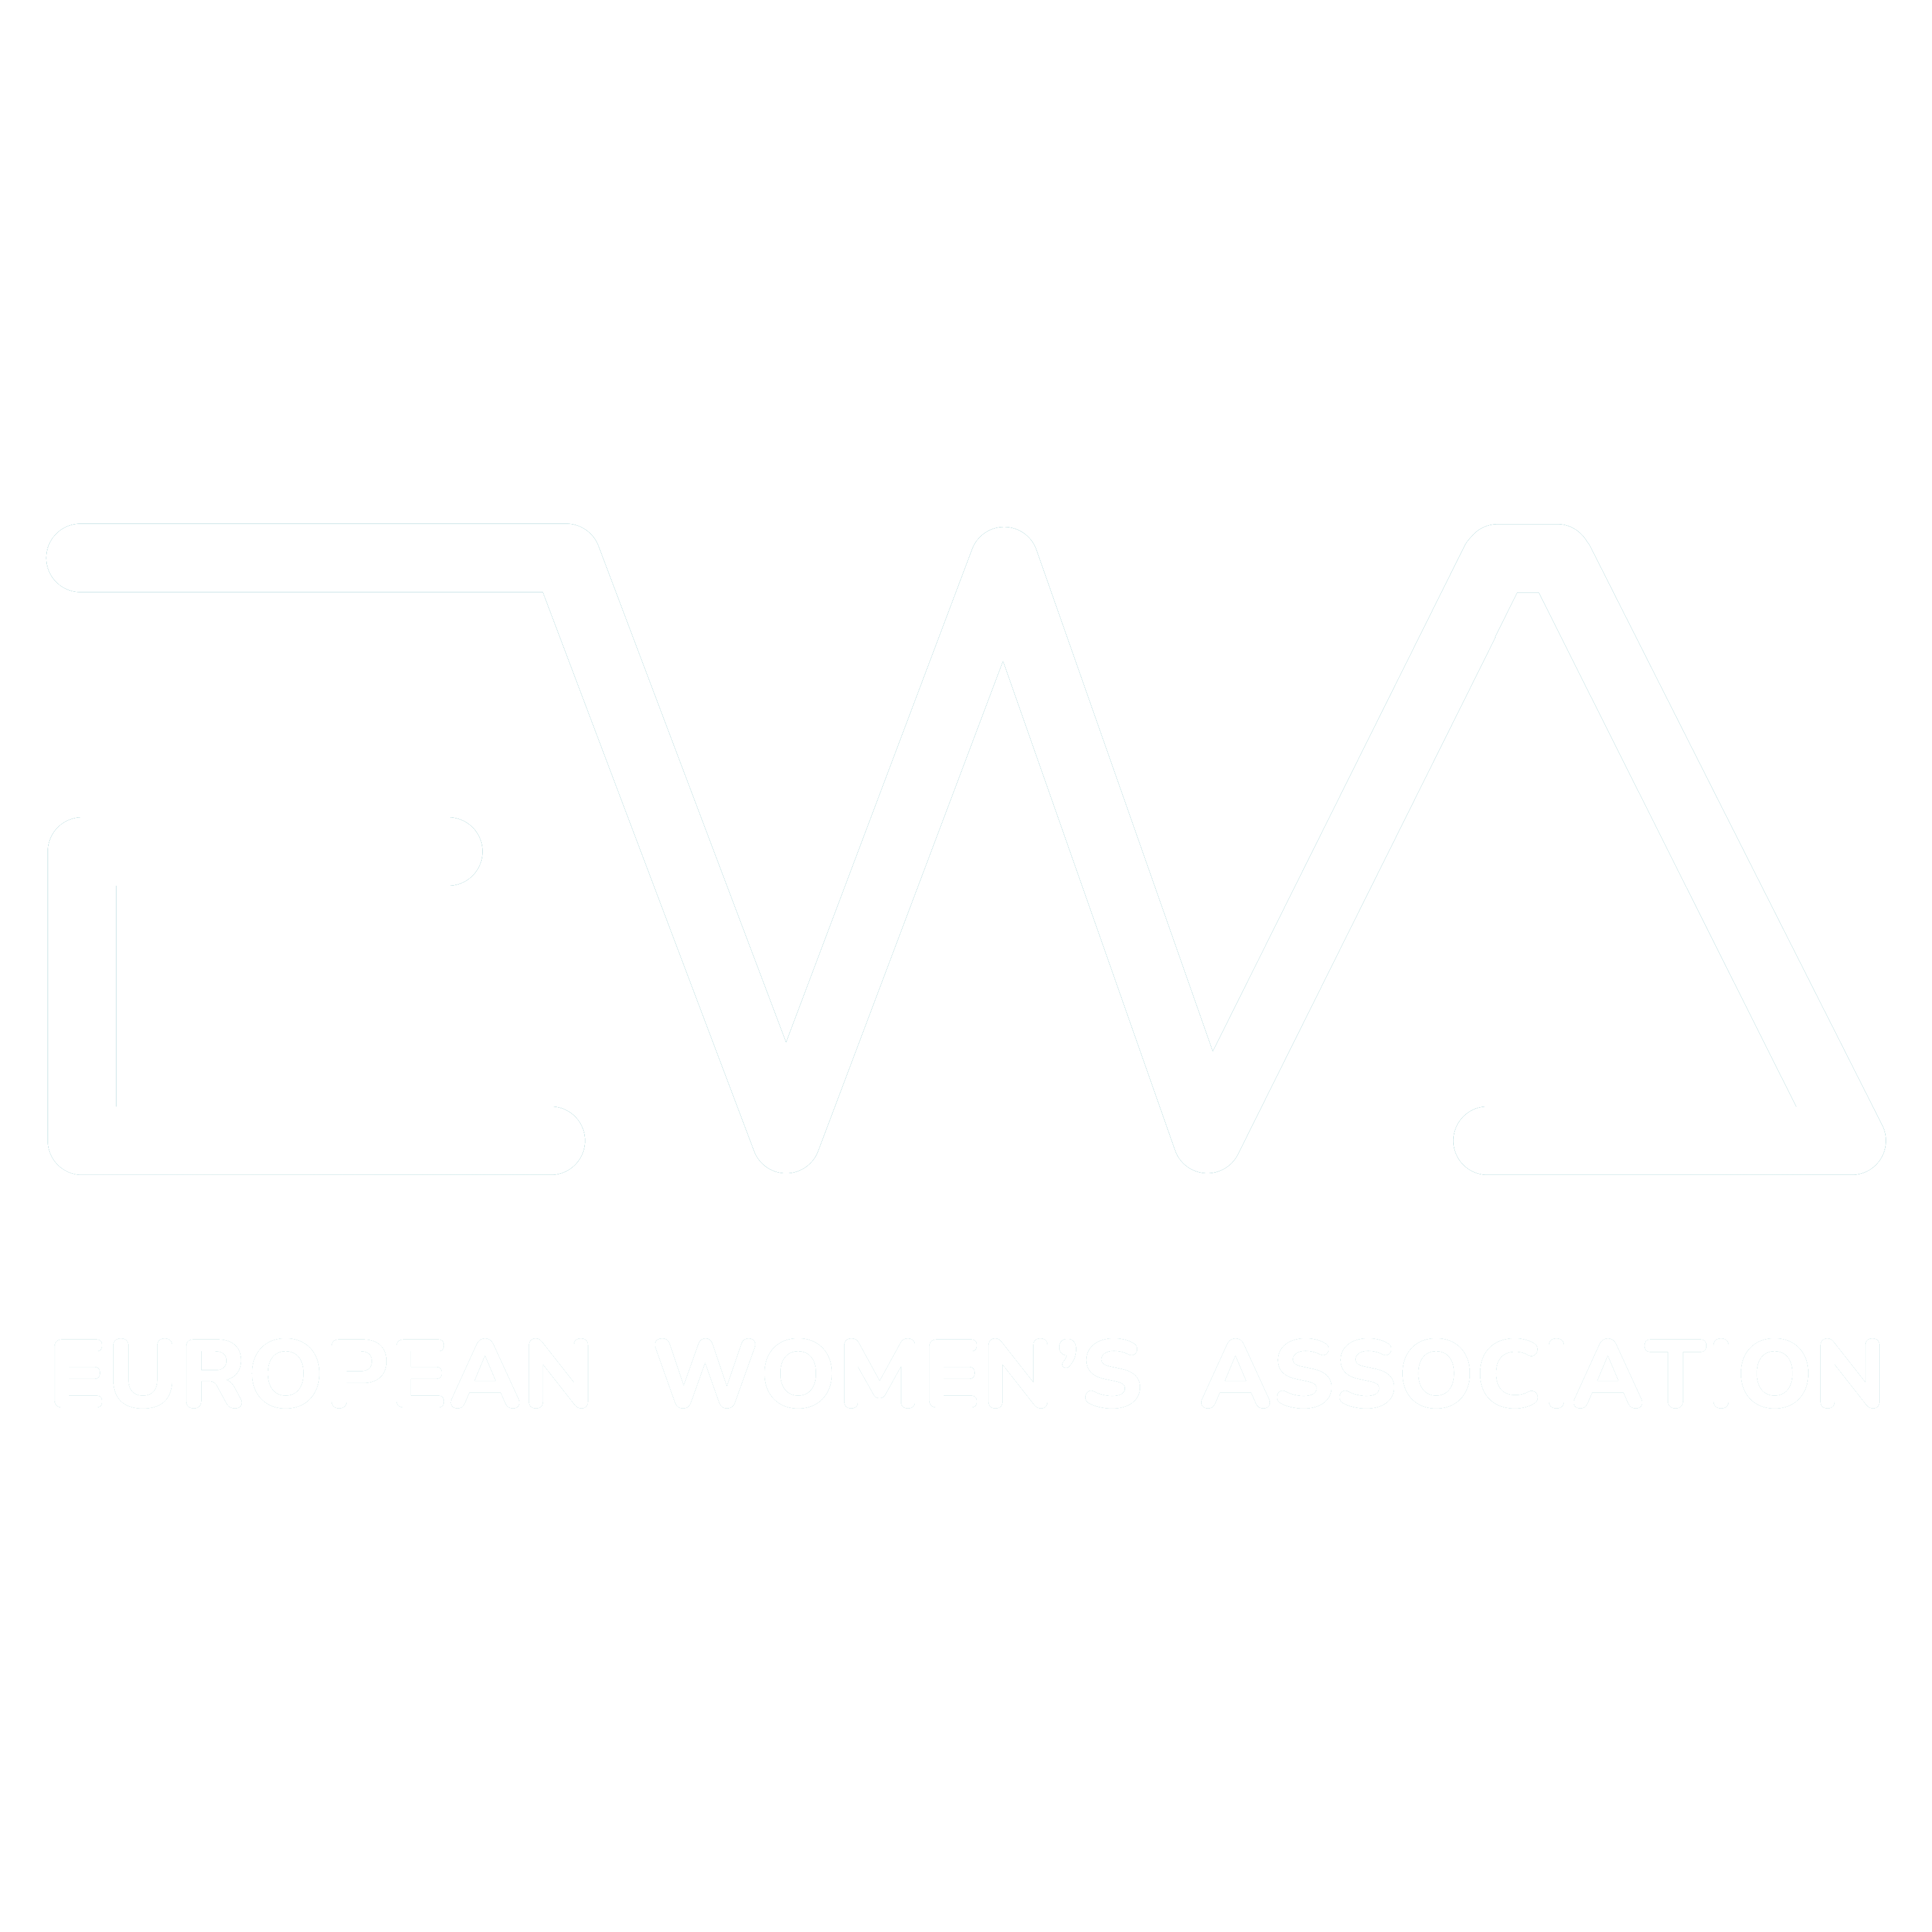 EWA initiates fundraising “Help Children and their families in Ukraine”